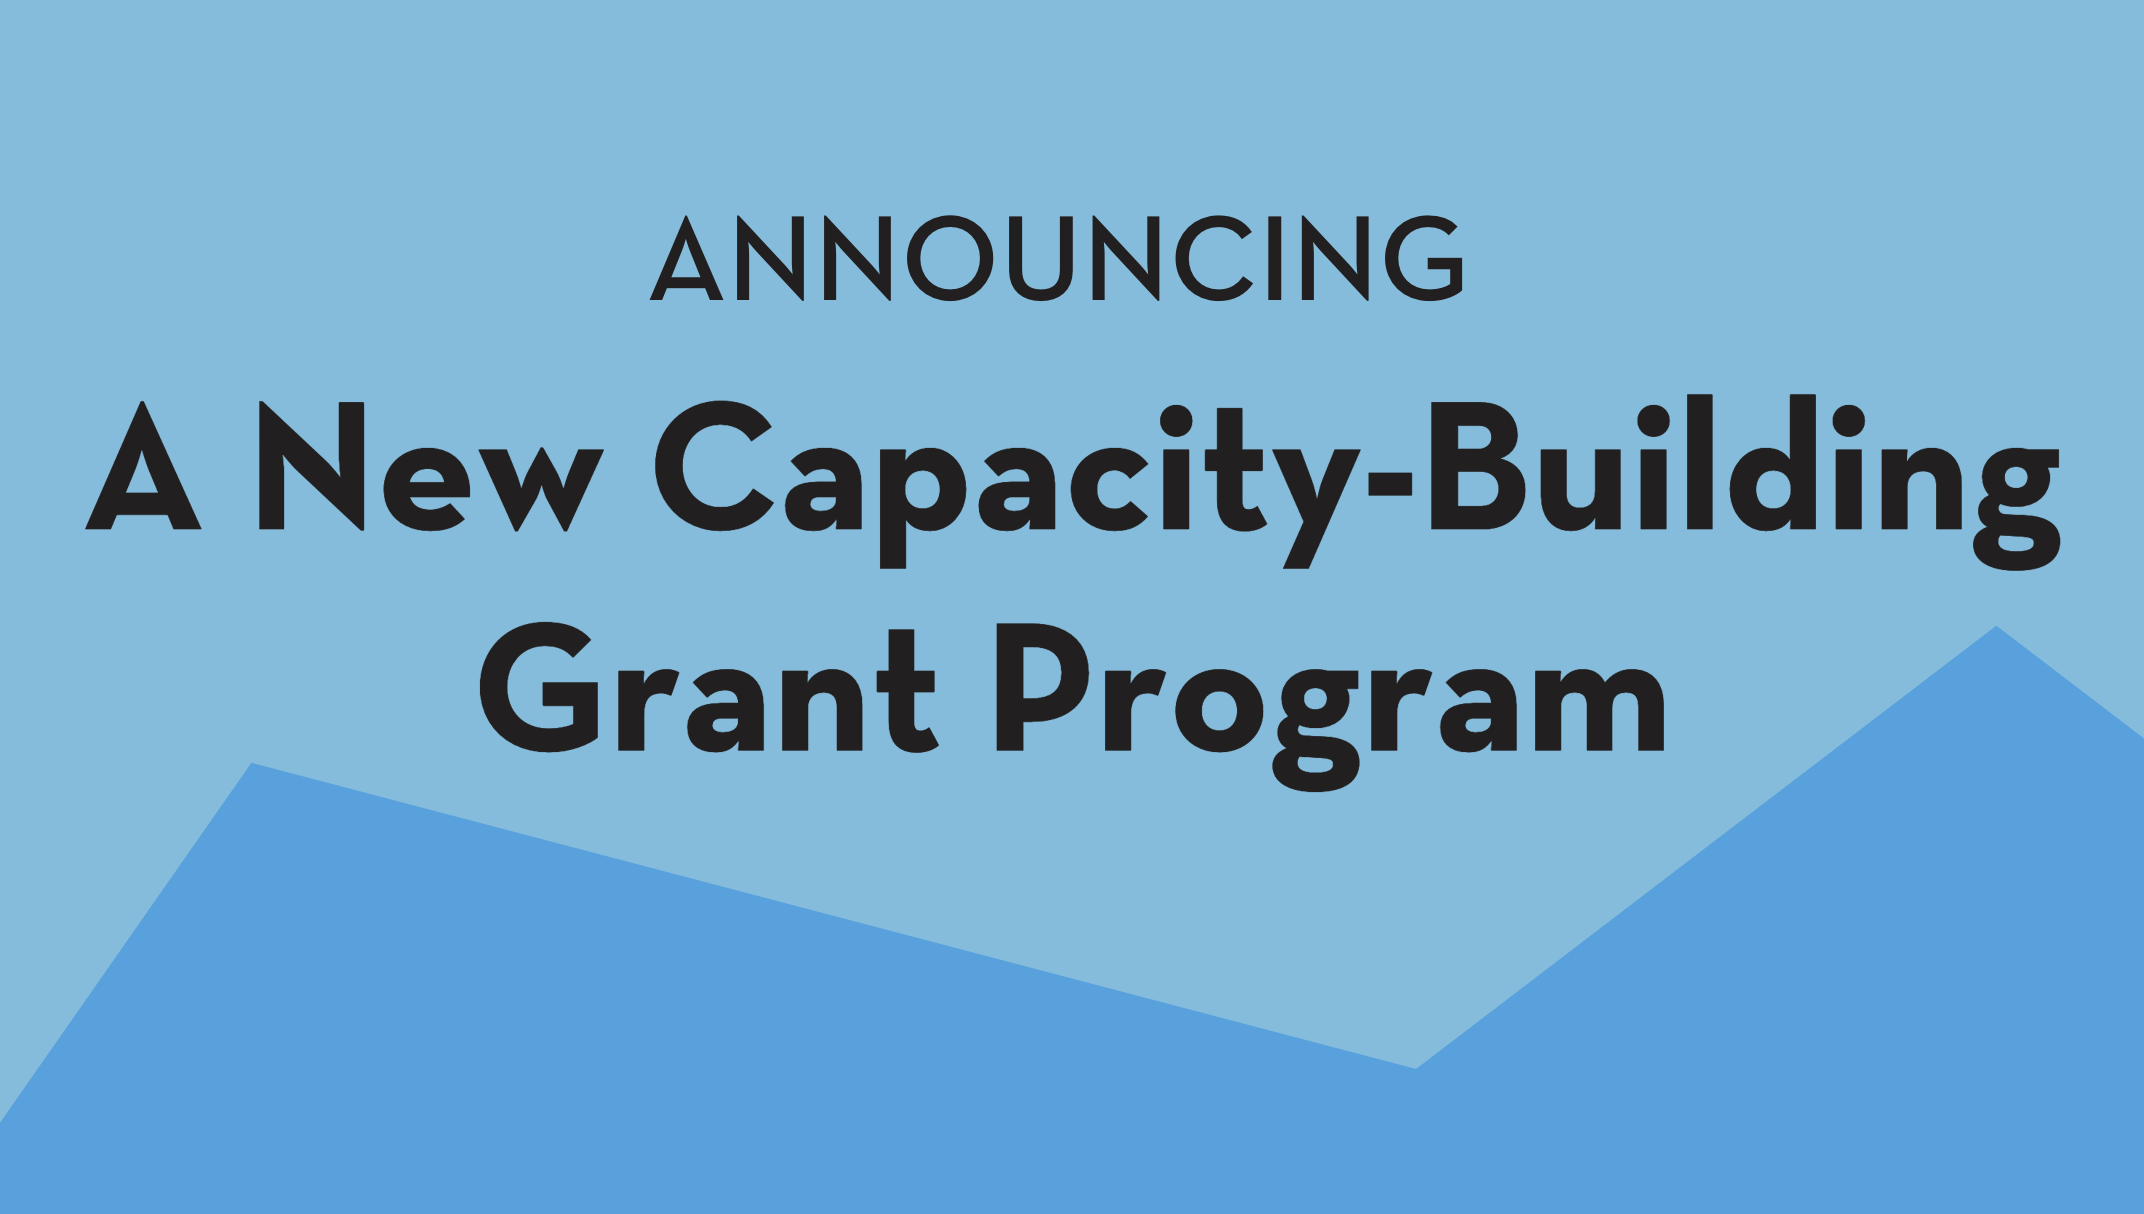 CapacityBuilding Grant Program Community of Literary Magazines and